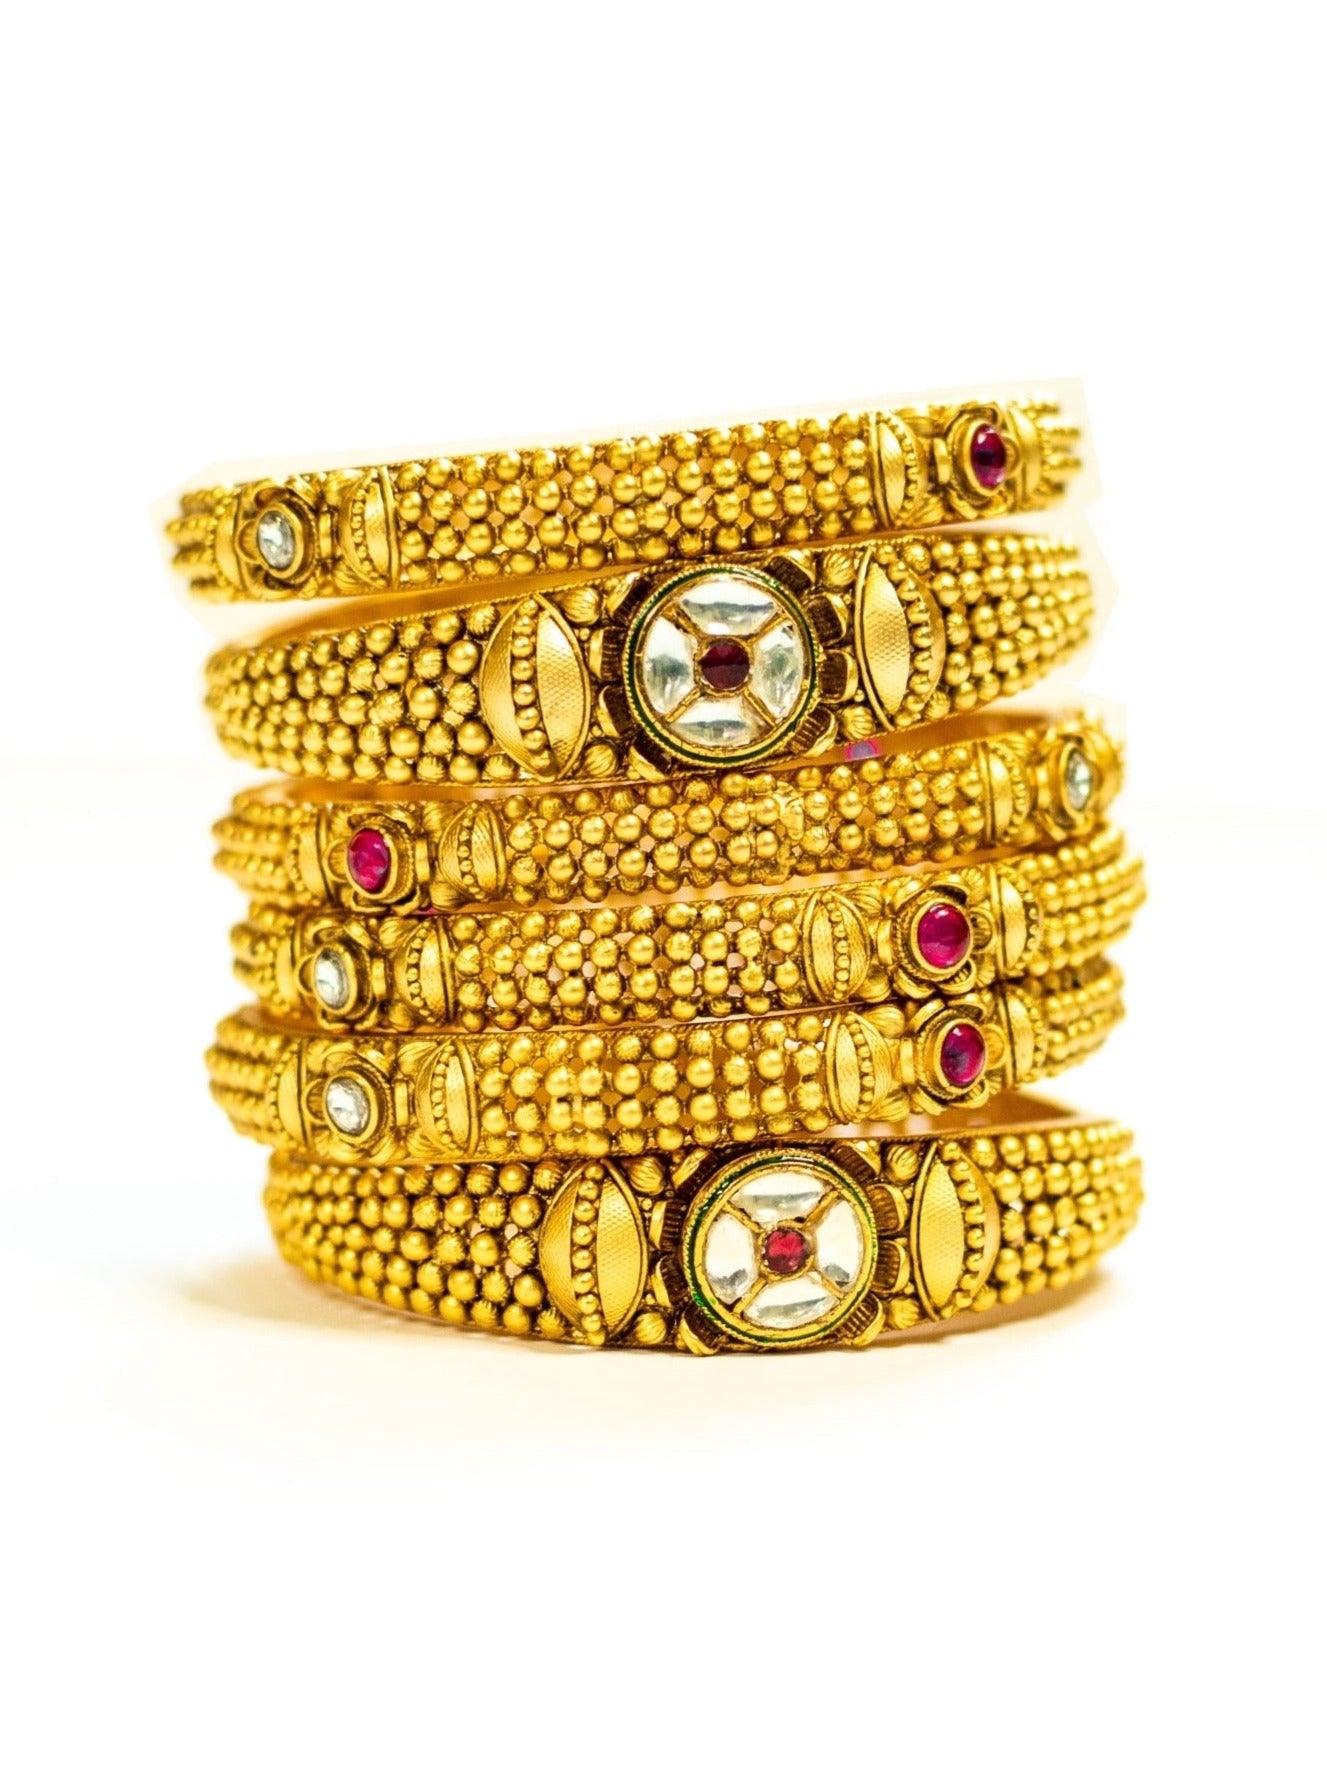 Rajasthani Bridal Jewelry - Wedding gold bangles for women